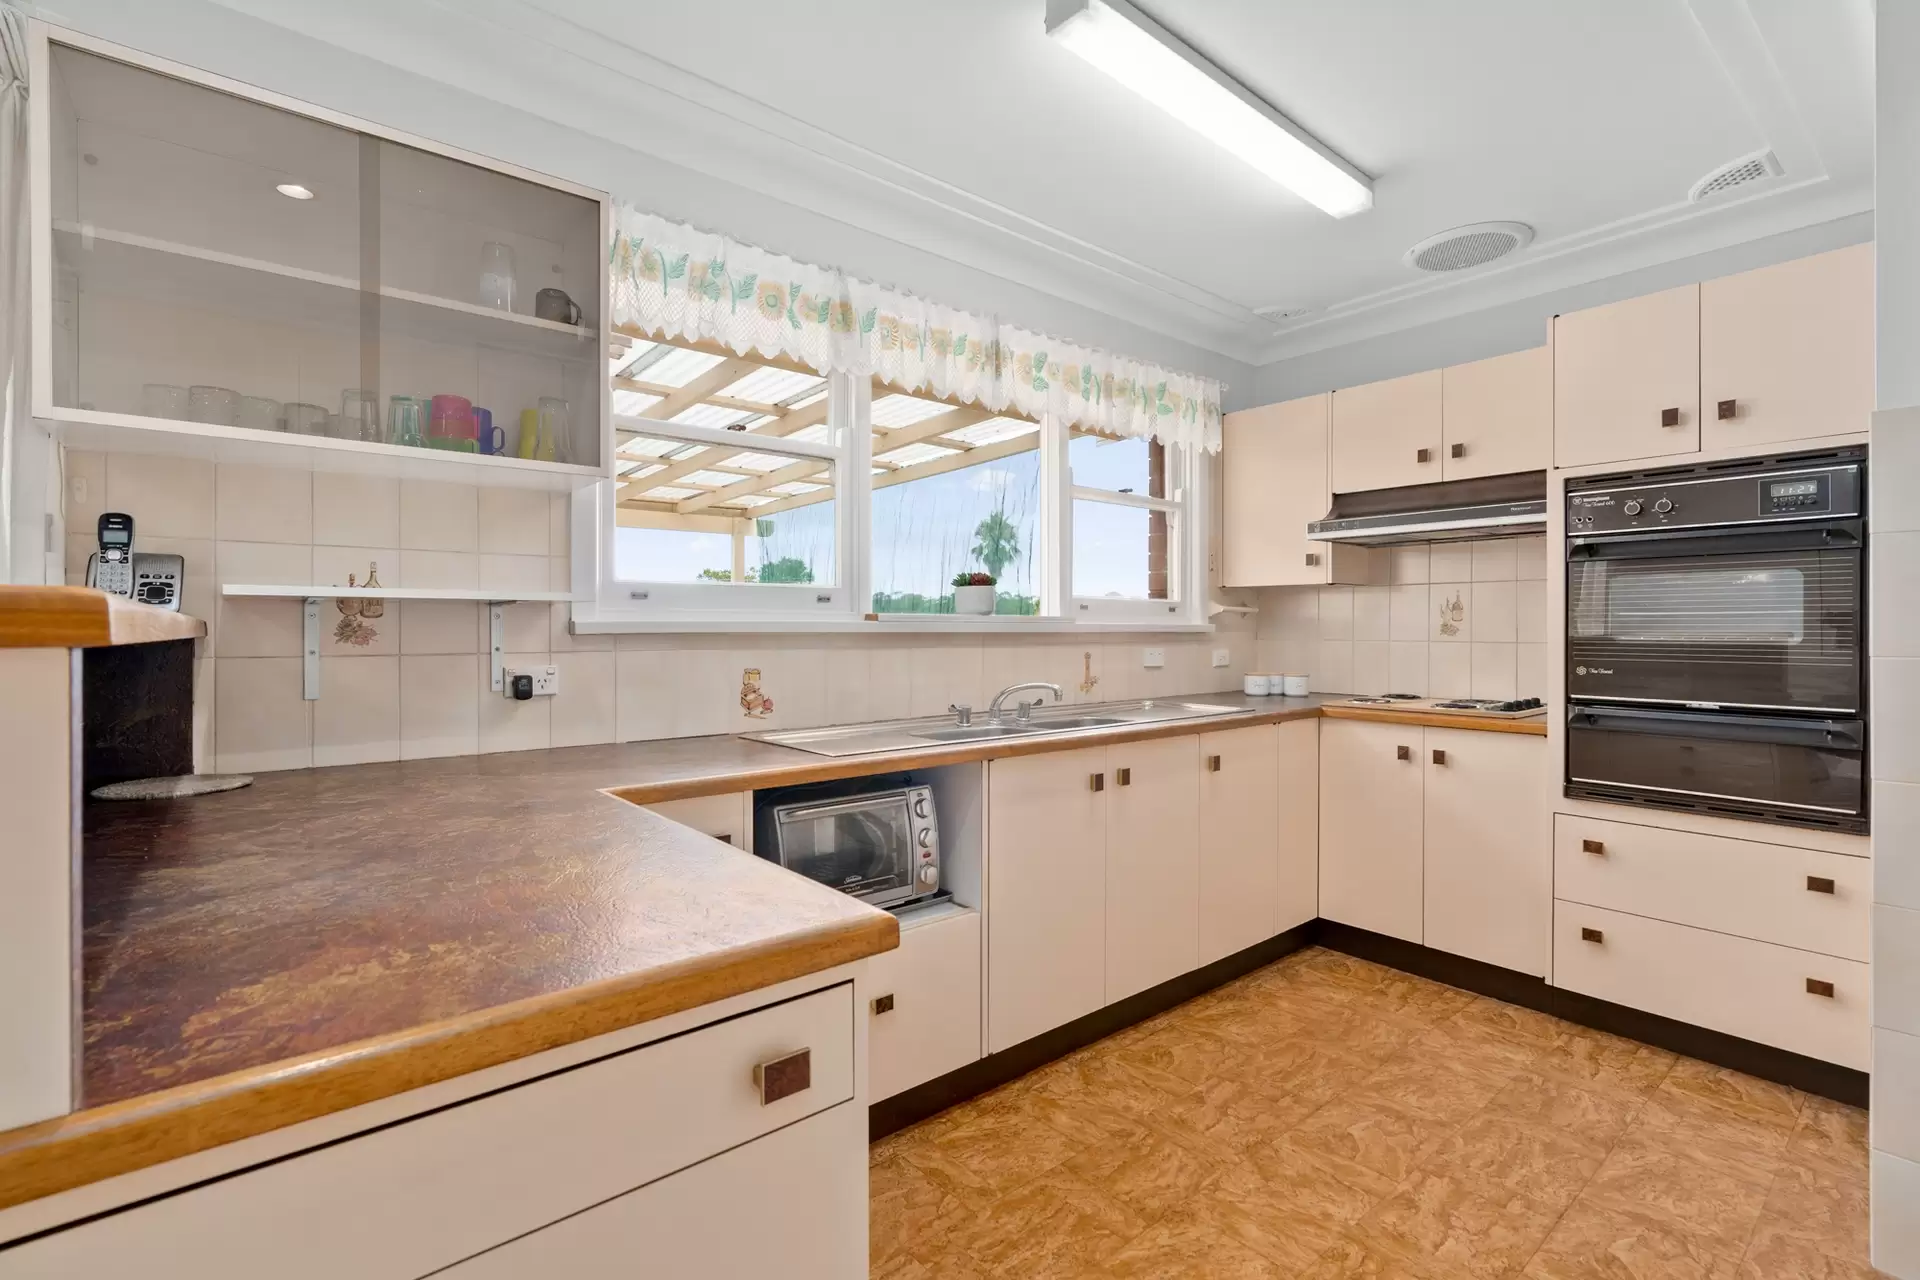 109 Flinders Road, Georges Hall Sold by Richard Matthews Real Estate - image 3